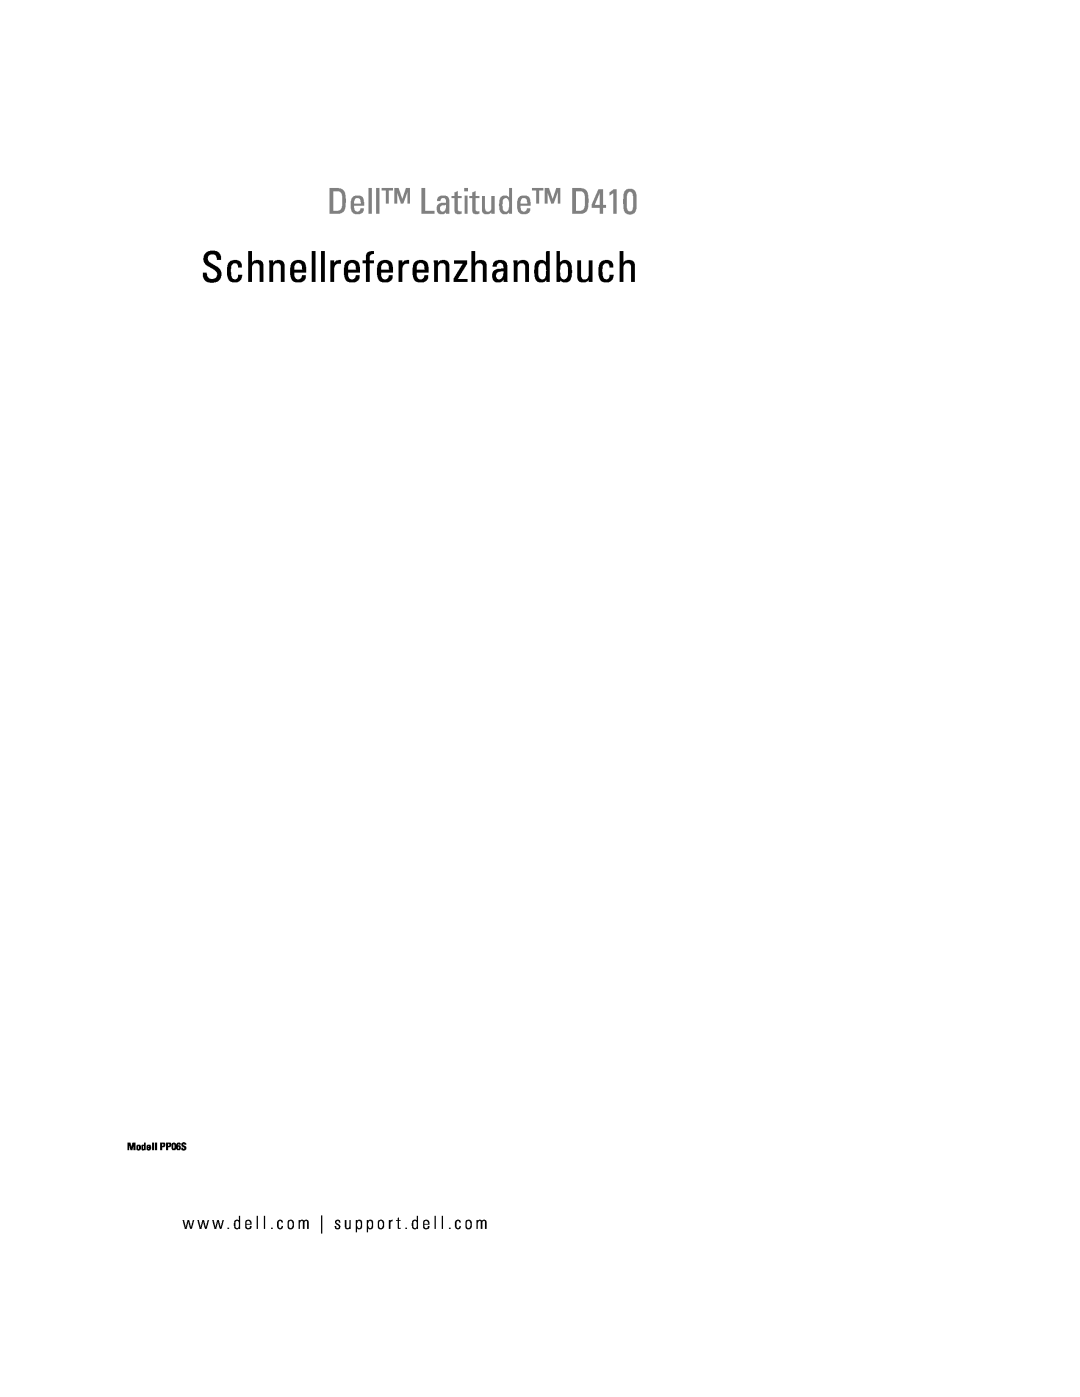 Dell manual Schnellreferenzhandbuch, Dell Latitude D410, Modell PP06S 